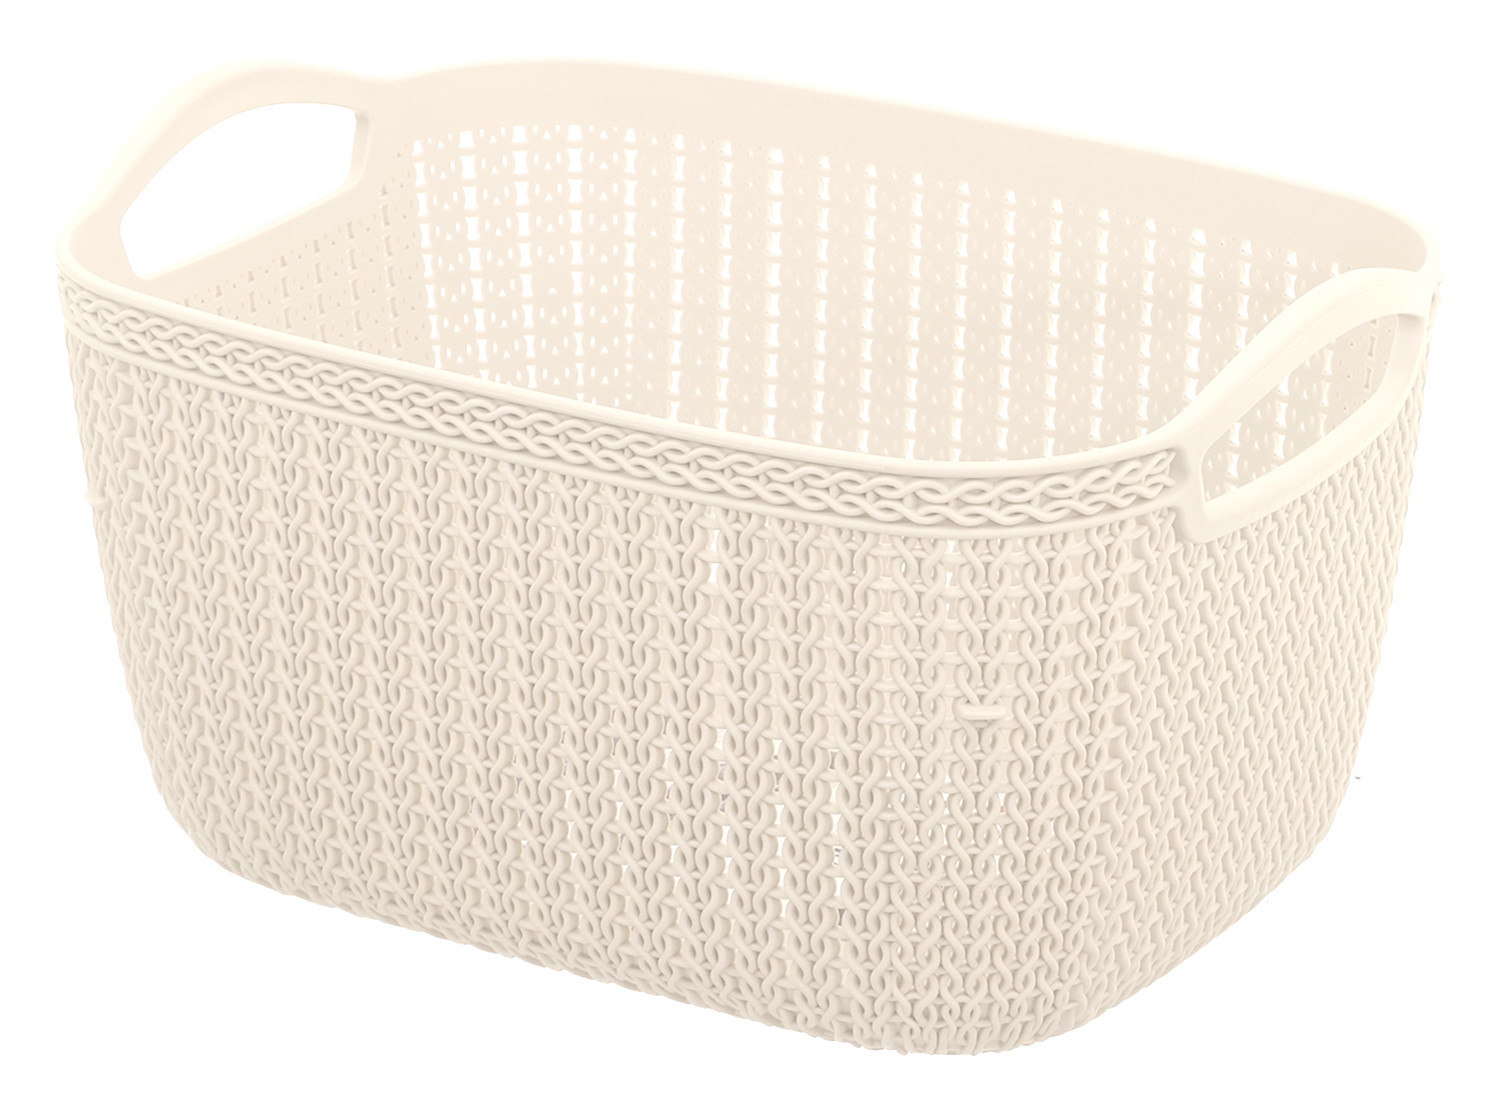 Kuber Industries Unbreakable Plastic Multipurpose Medium Size Flexible Storage Baskets / Fruit Vegetable Bathroom Stationary Home Basket with Handles (Cream & Grey) -CTKTC39083